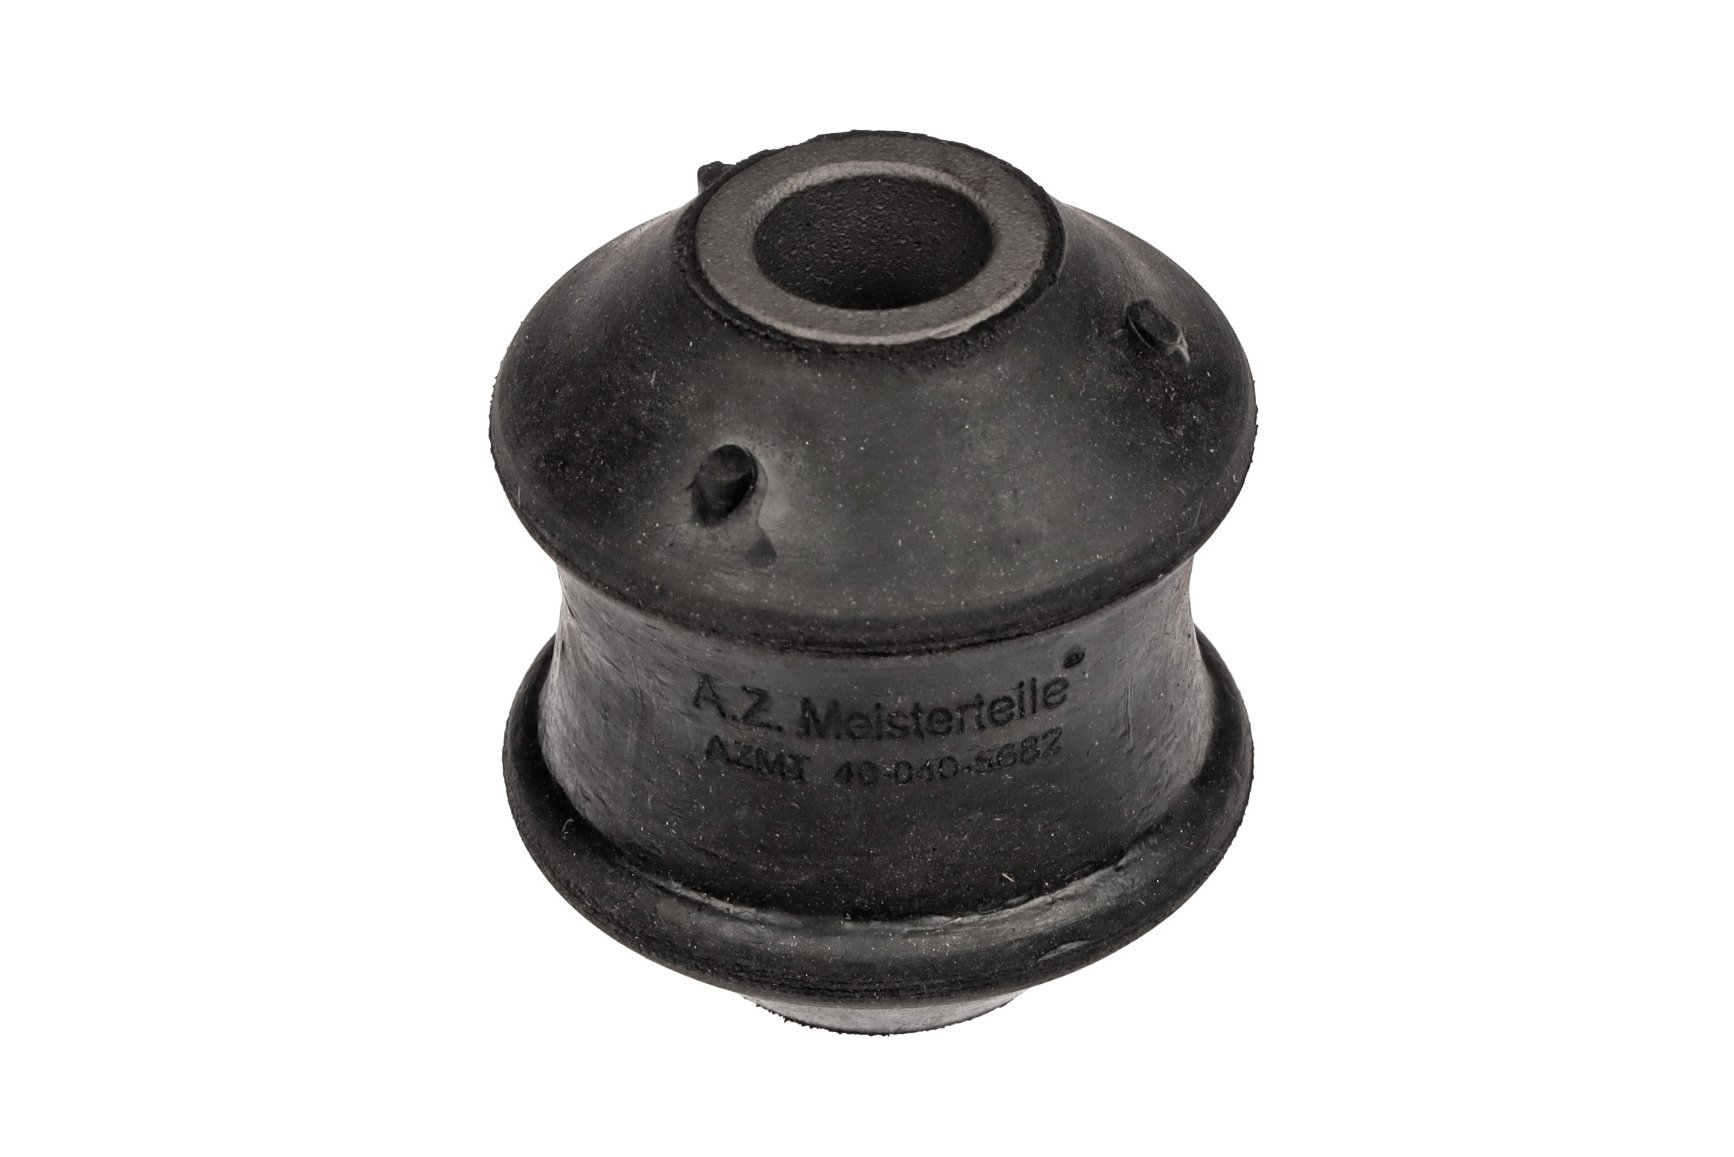 A.Z. Meisterteile AZMT-40-040-5682